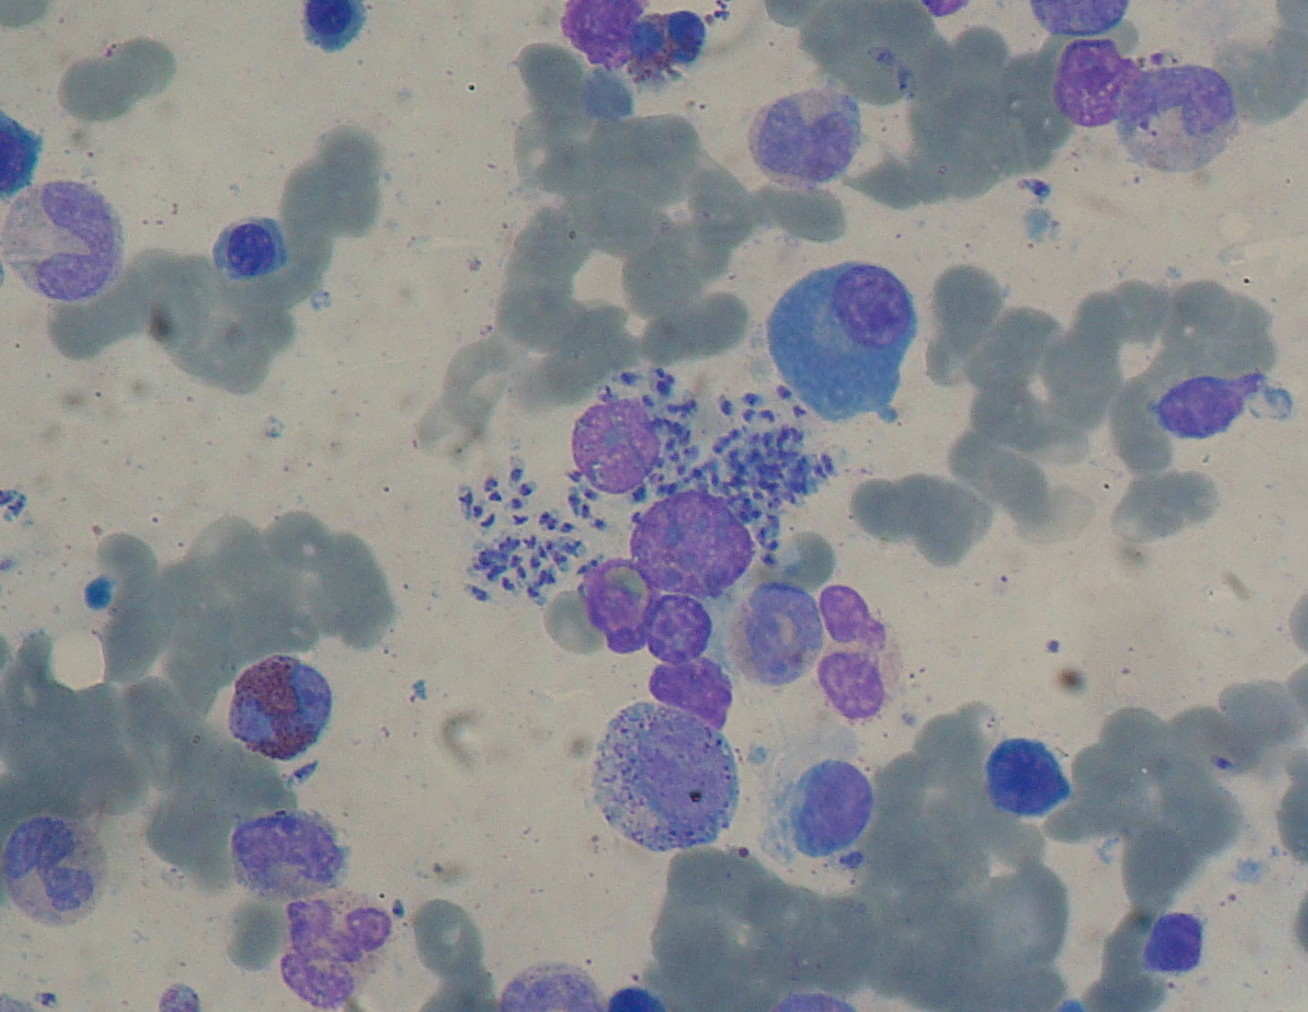 Laboratory image of Leishmania